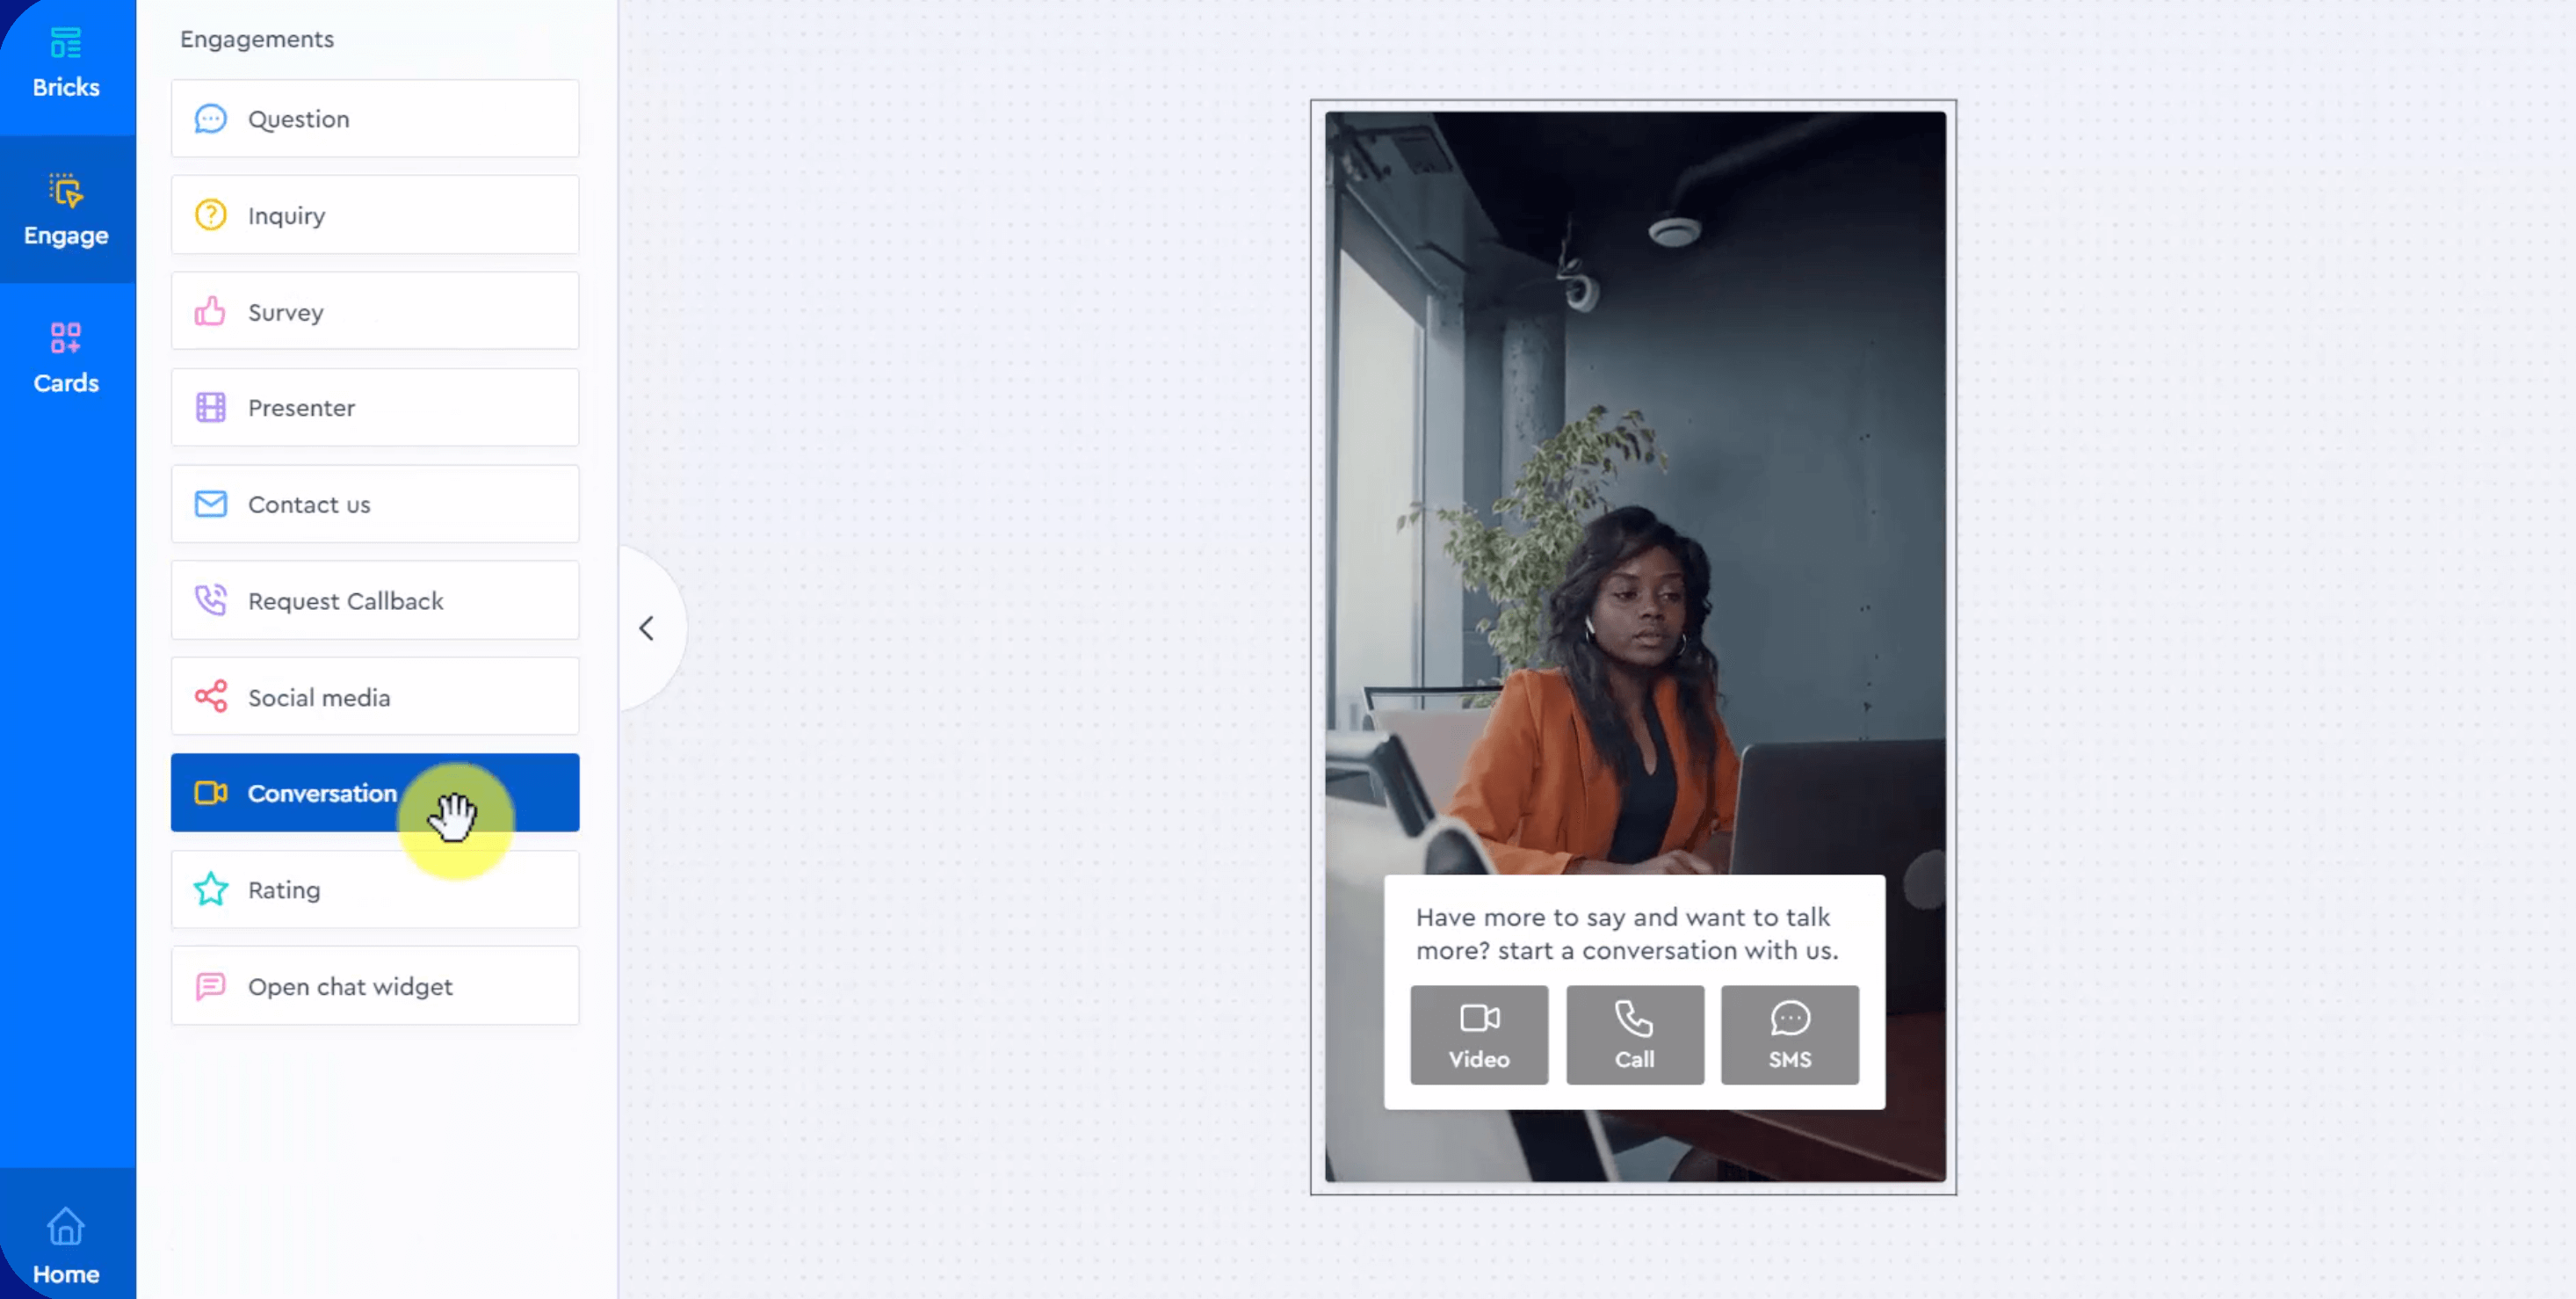 Cubeet Review – Interactive Video Widgets